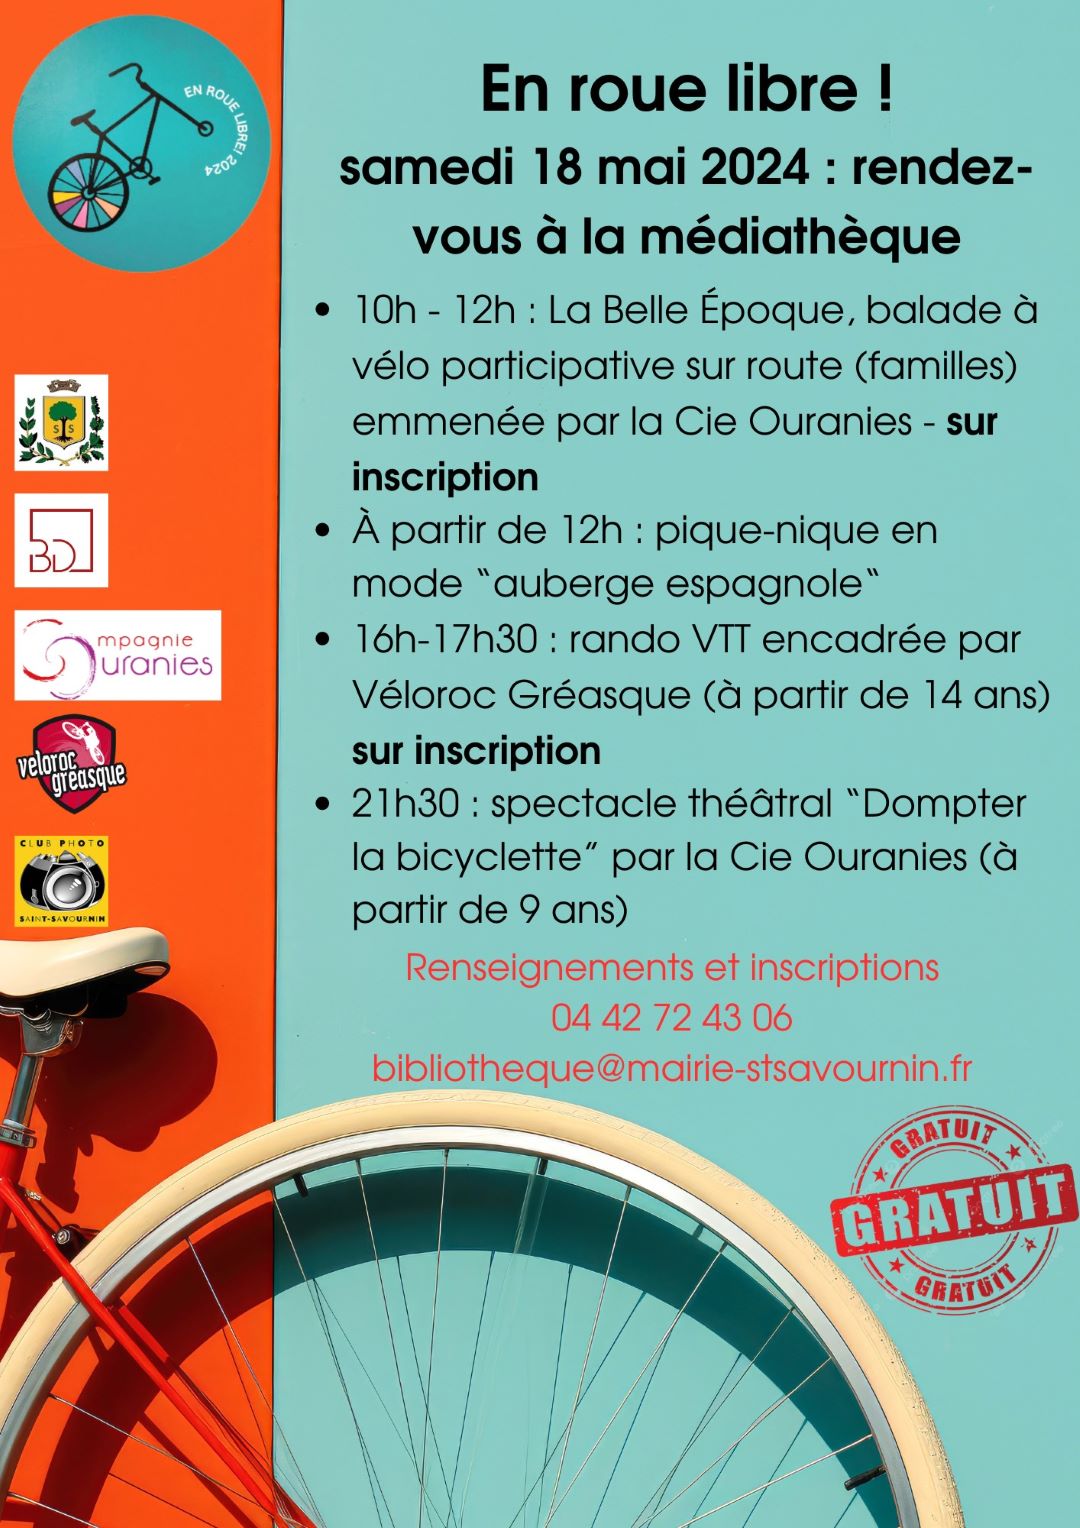 Mairie Saint-Savournin En roue libre samedi 18 mai 2024 balade à vélo participative pique-nique rando vtt spectacle théâtrale